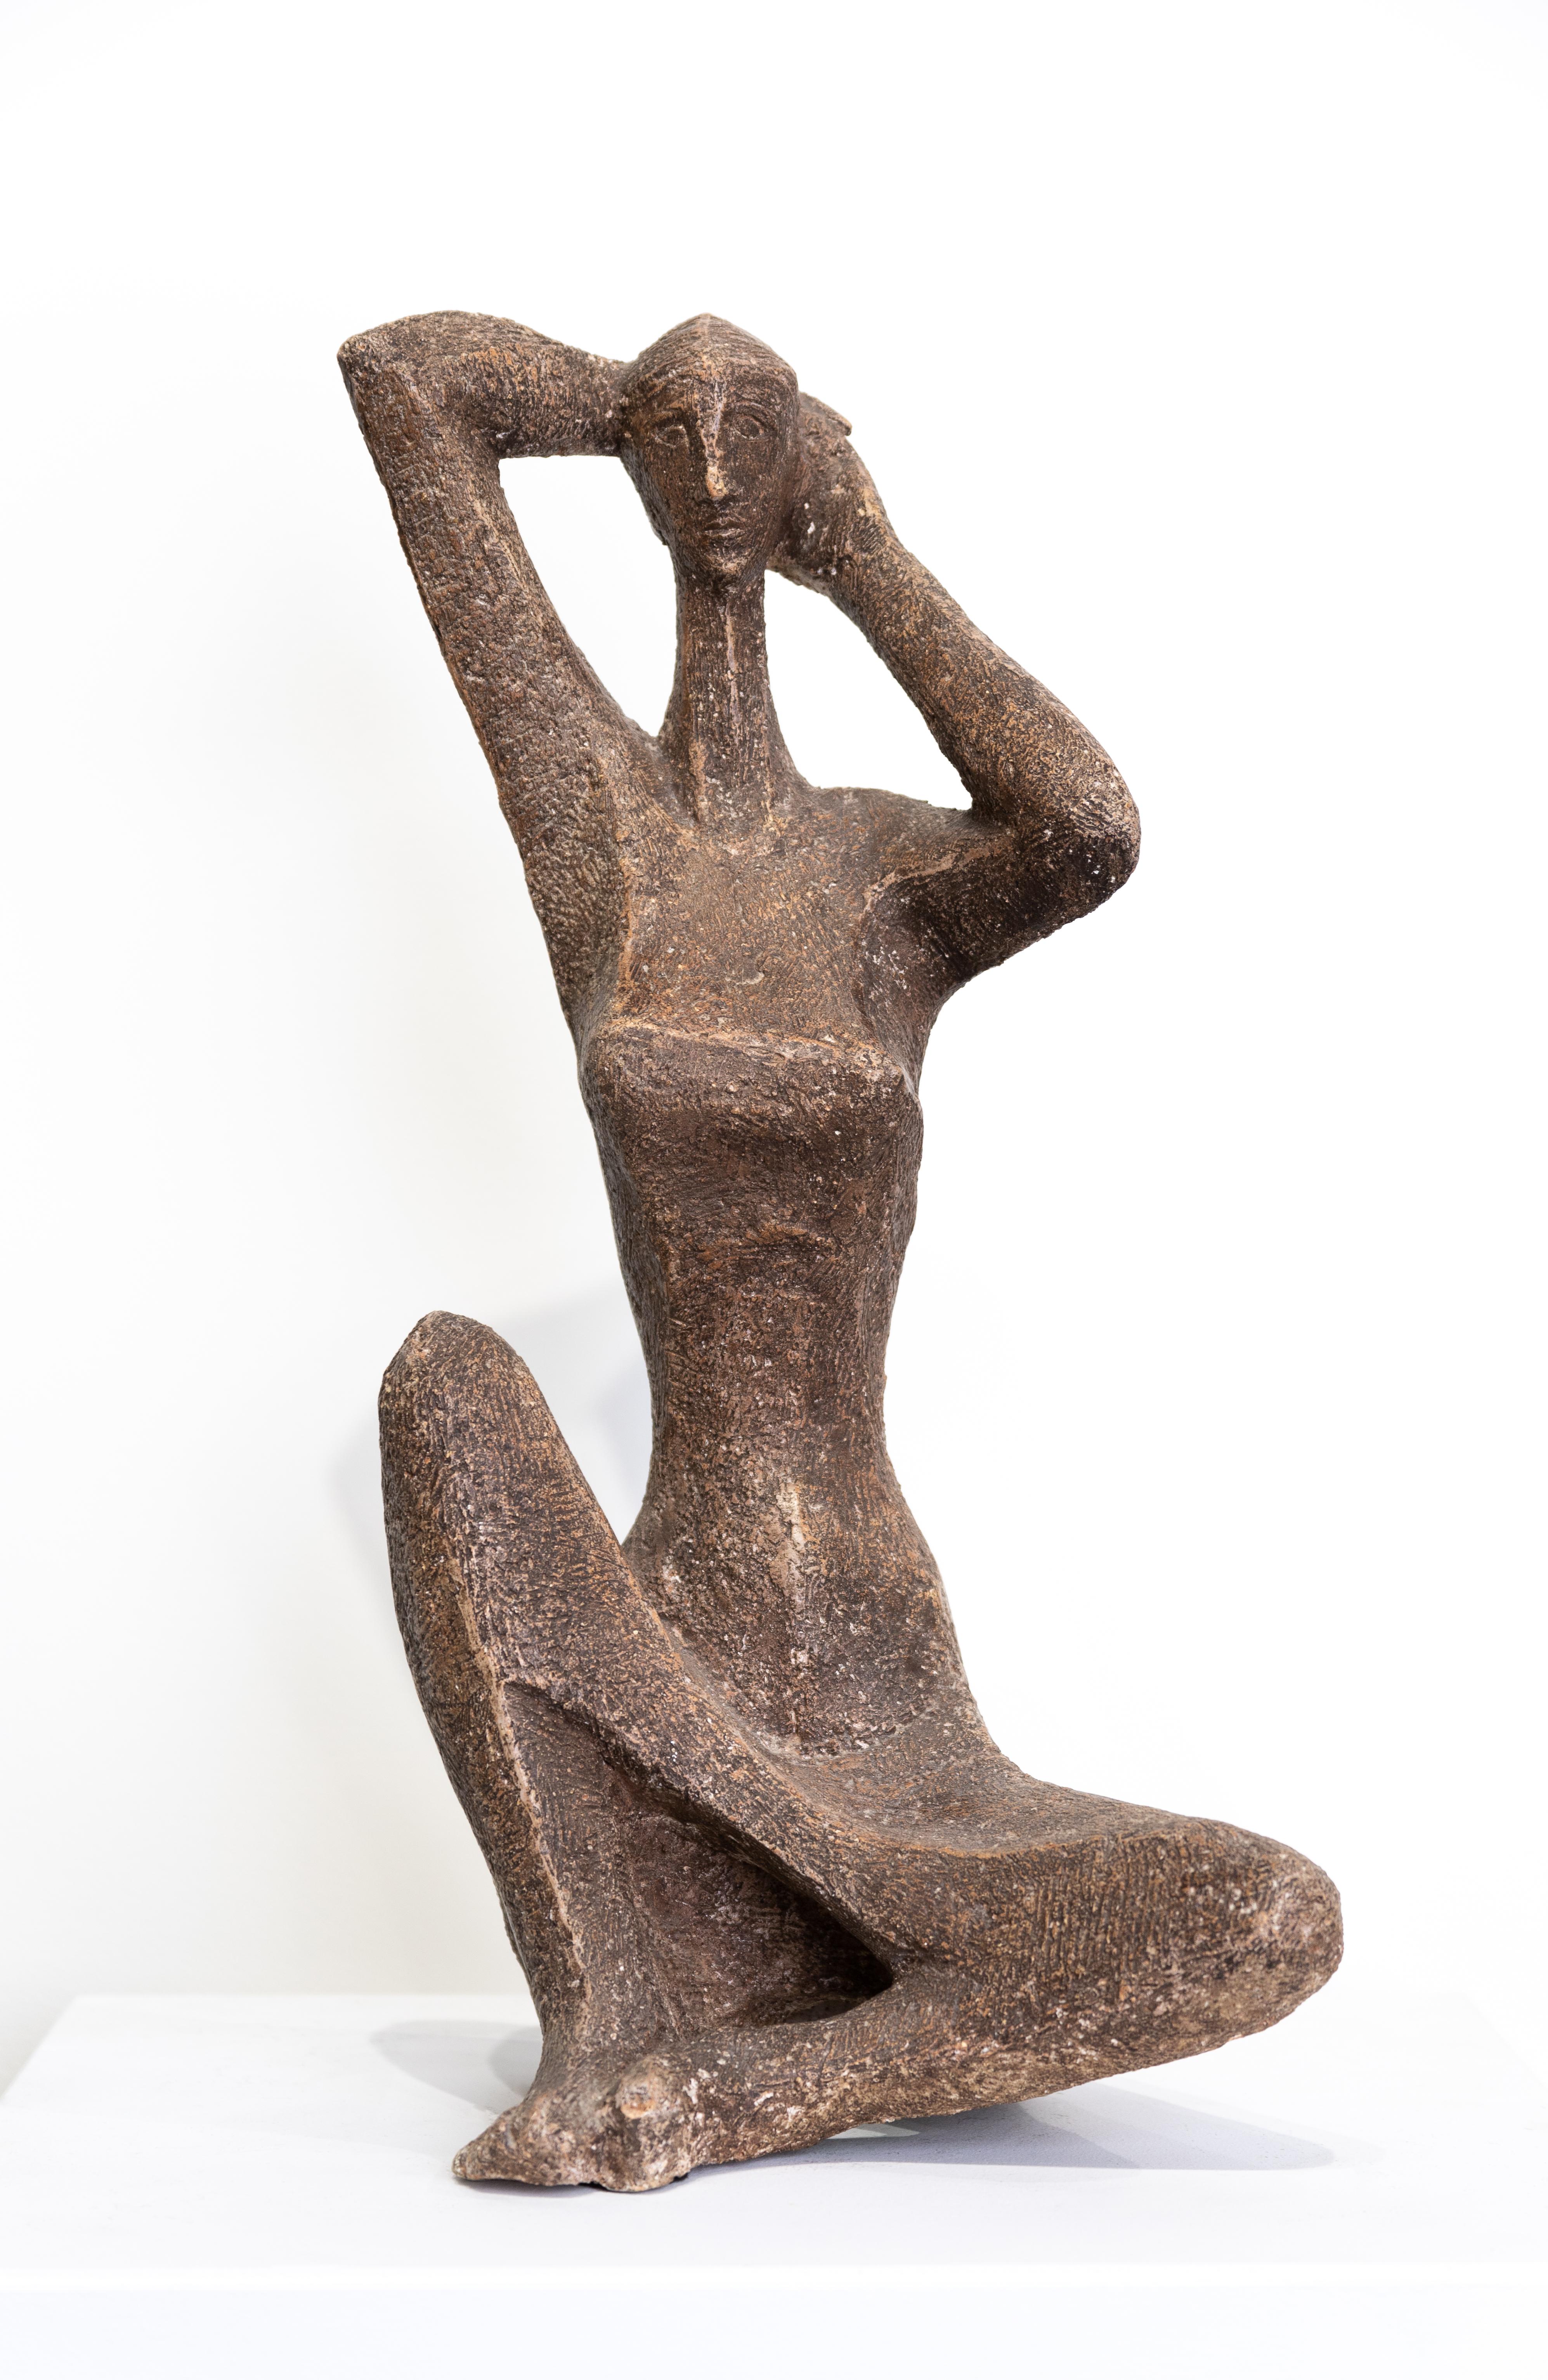 Sculpture en argile « Contemplation » de Walter Midener, mi-siècle moderne